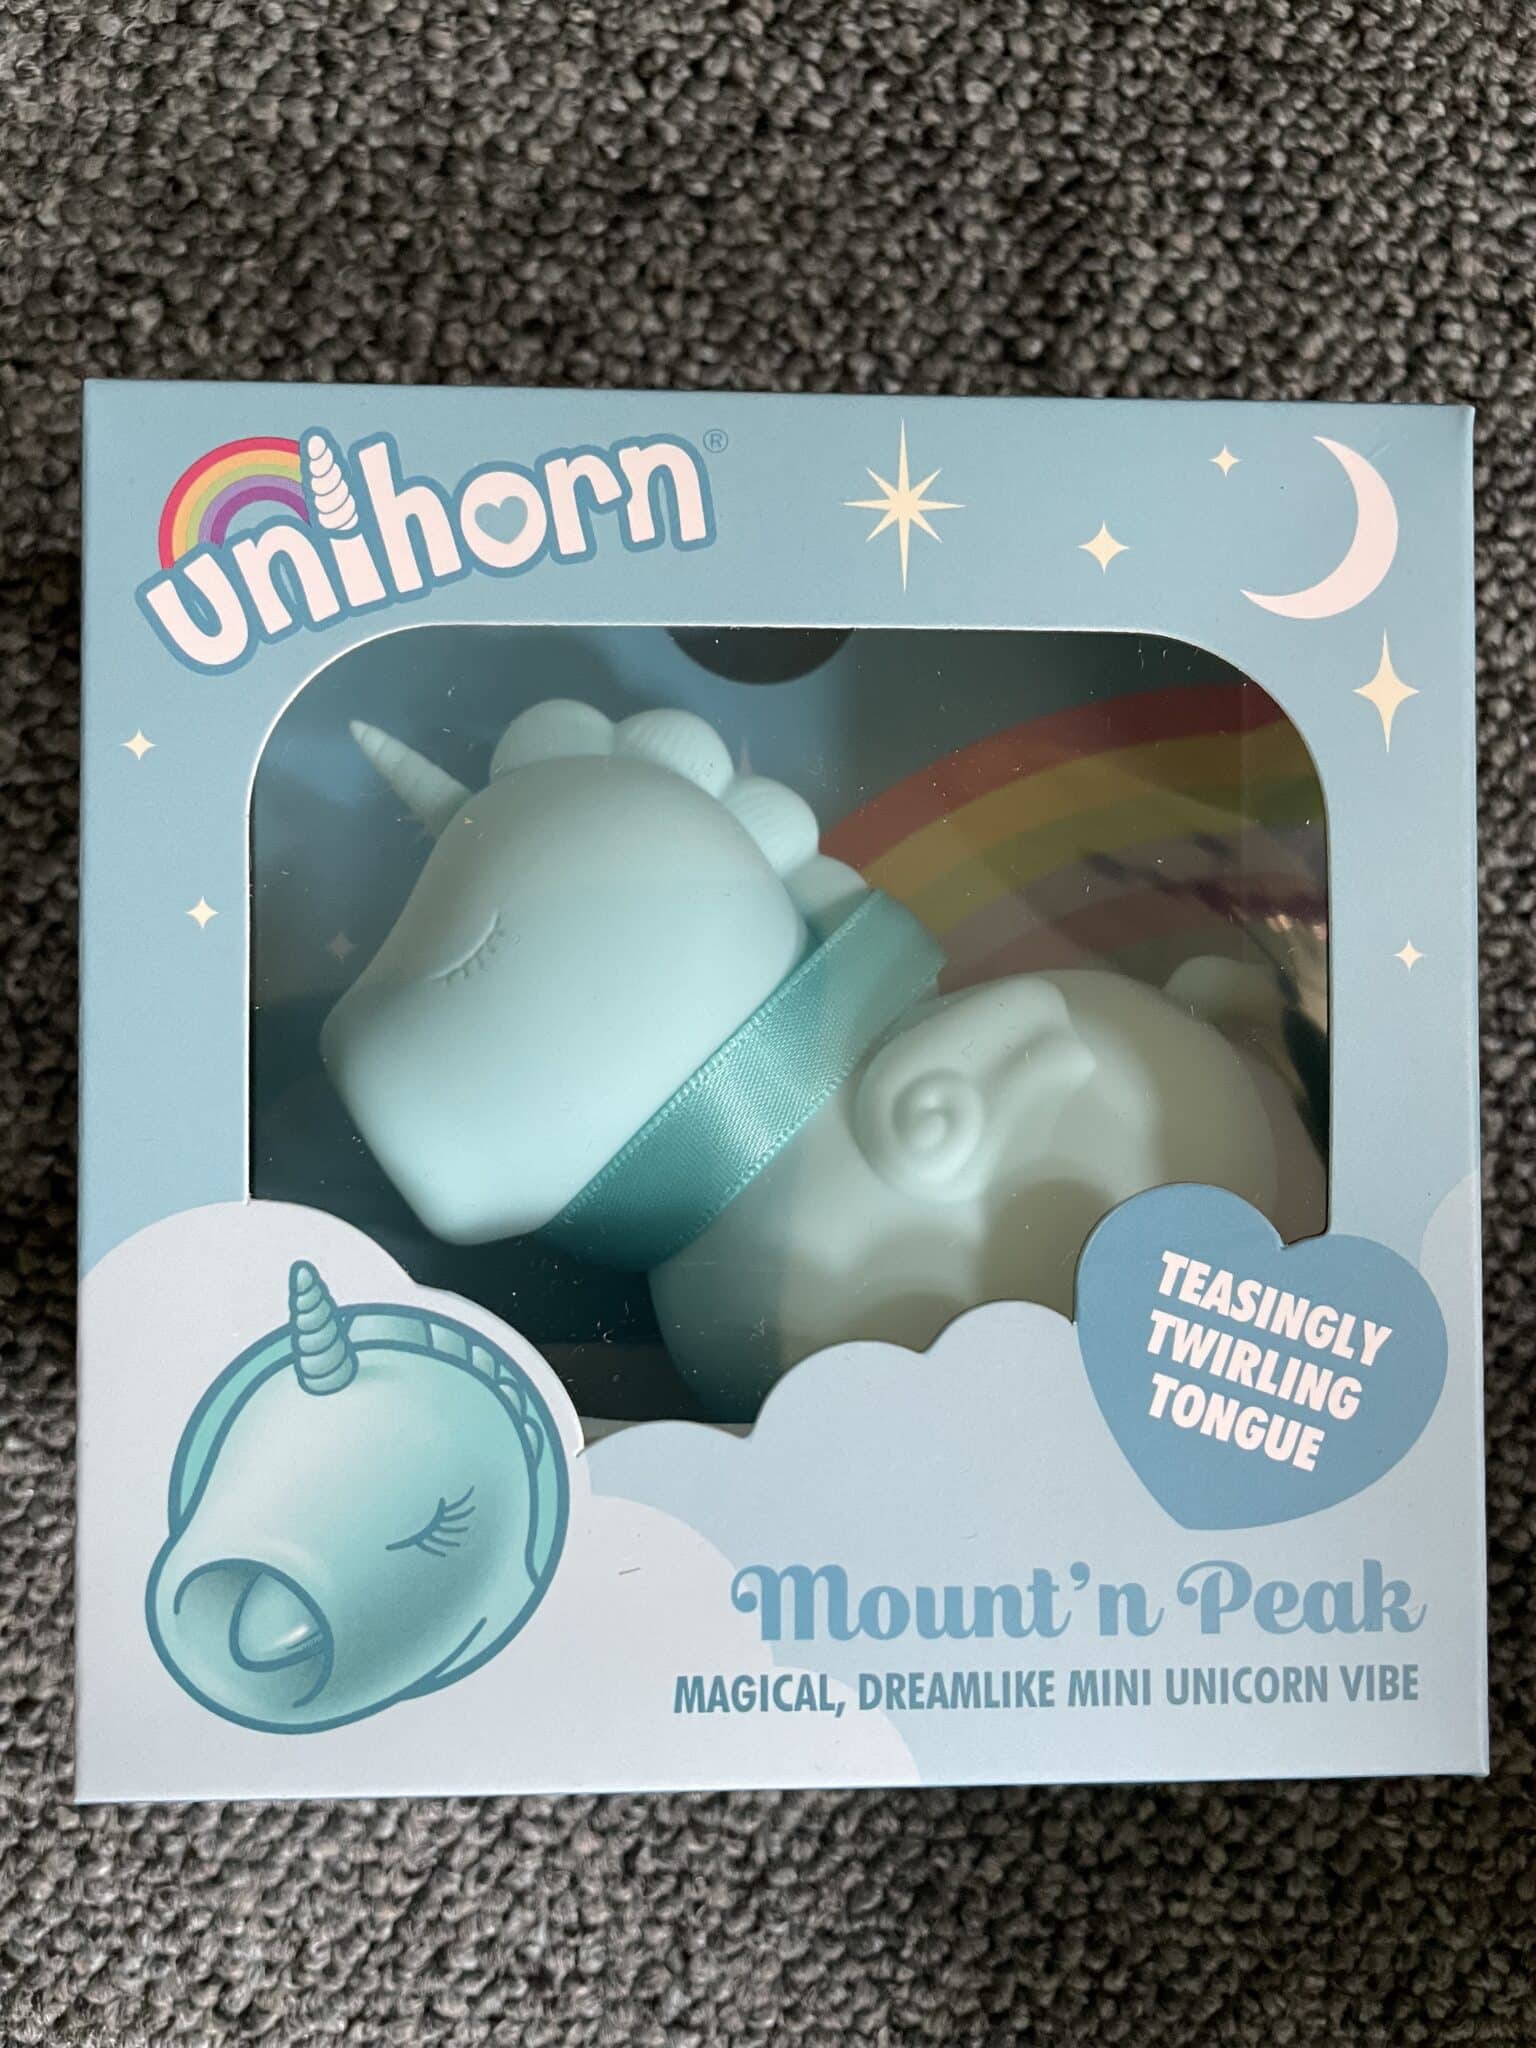 My Personal Experiences with Unihorn Mount'n Peak